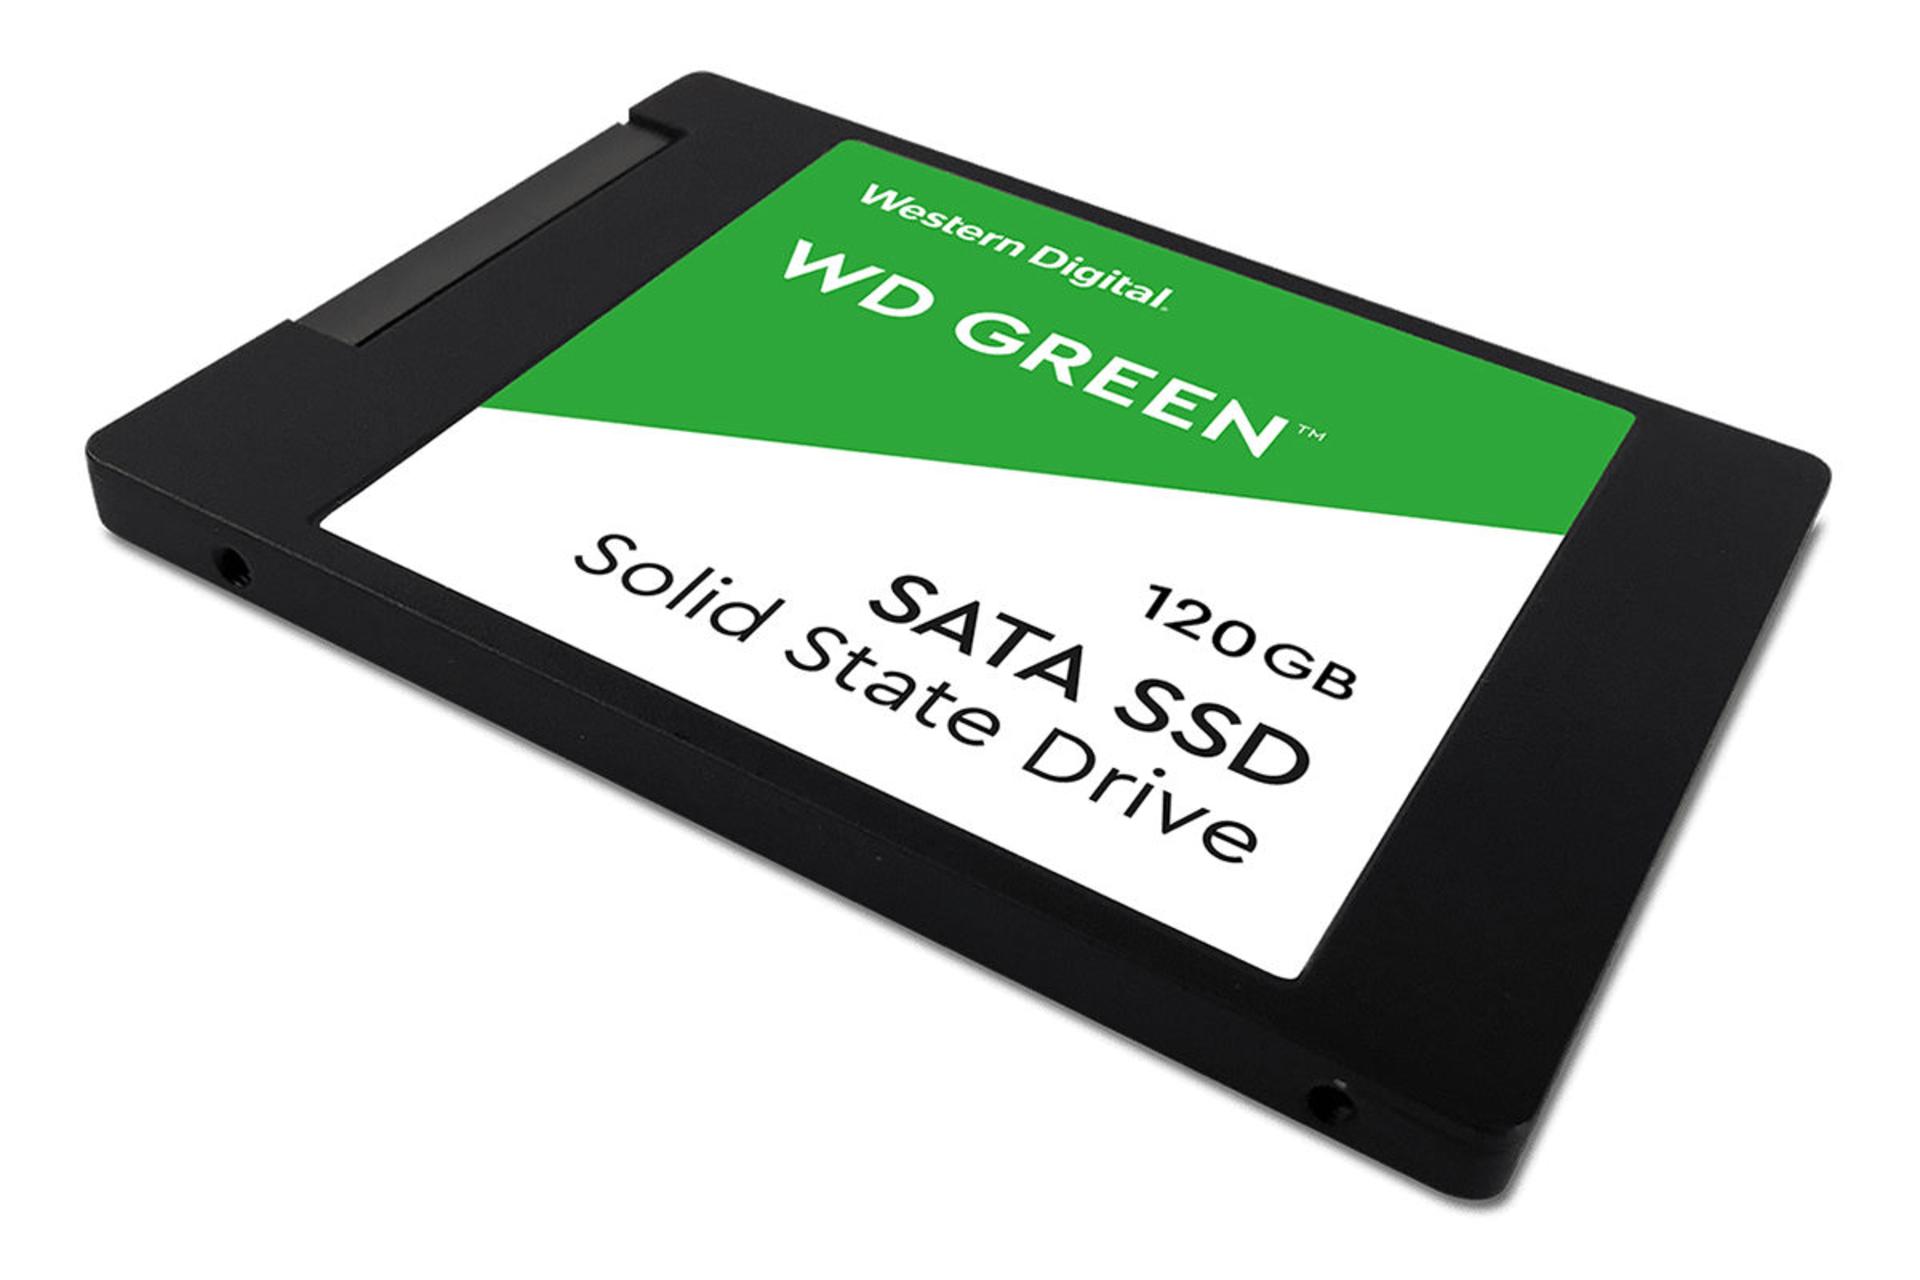 وسترن دیجیتال GREEN WDS120G2G0B ظرفیت 120 گیگابایت / Western Digital GREEN WDS120G2G0B 120GB